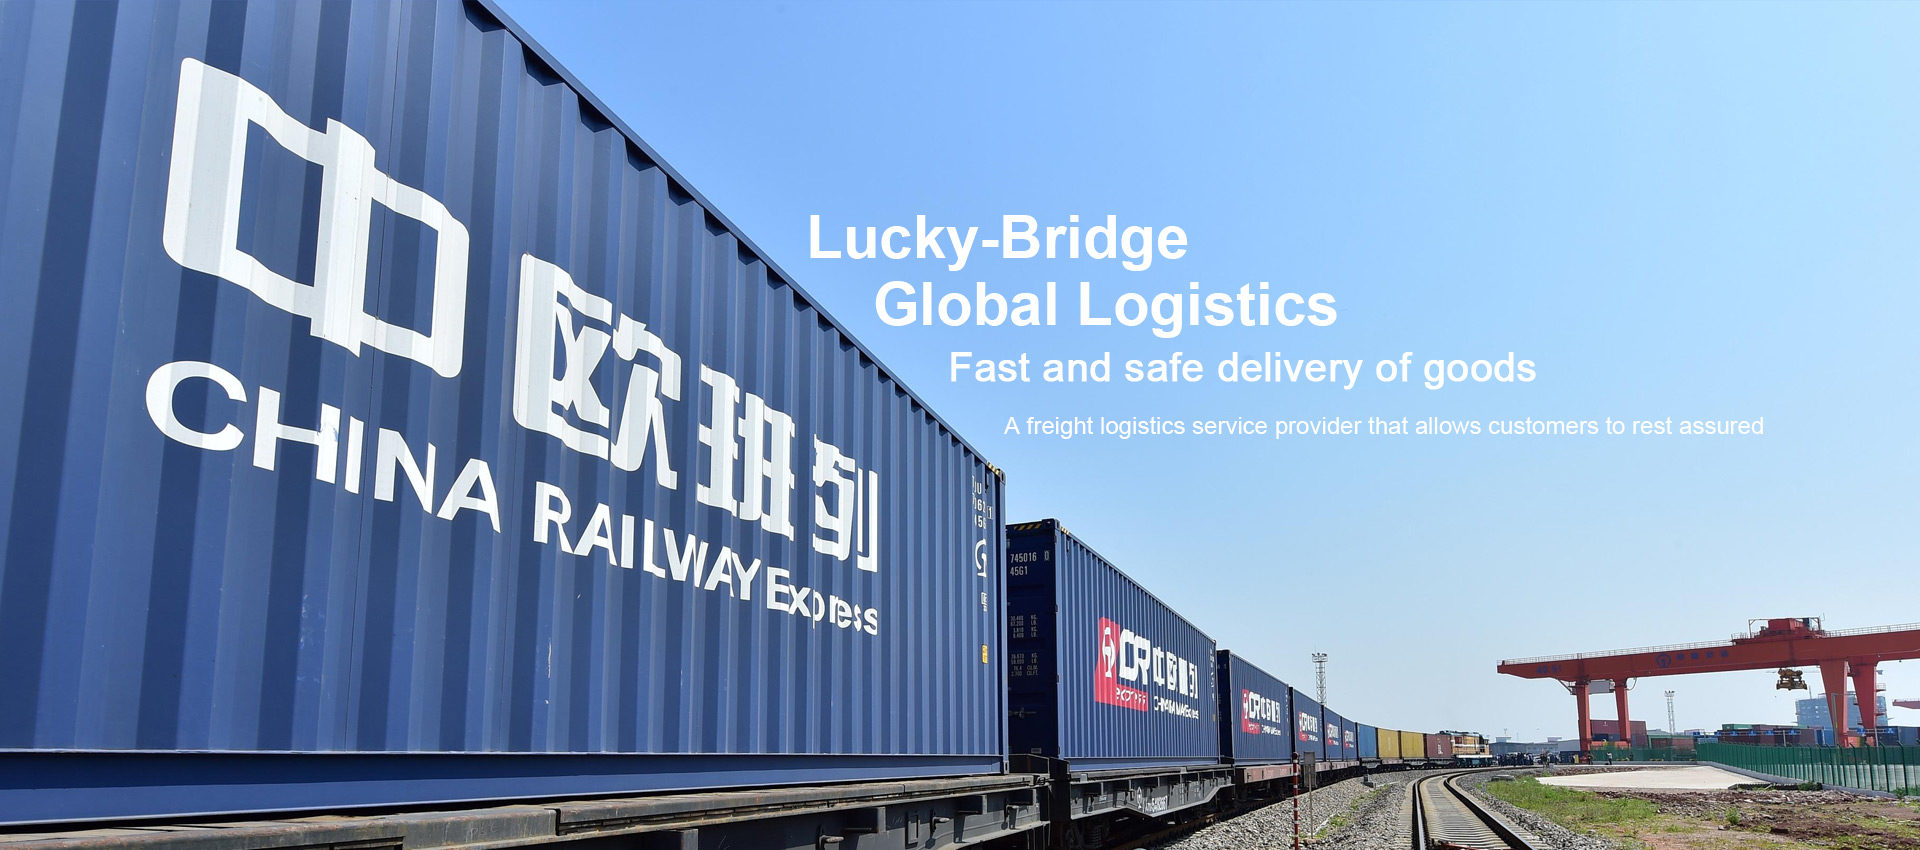 Lucky-Bridge  Global Logistics